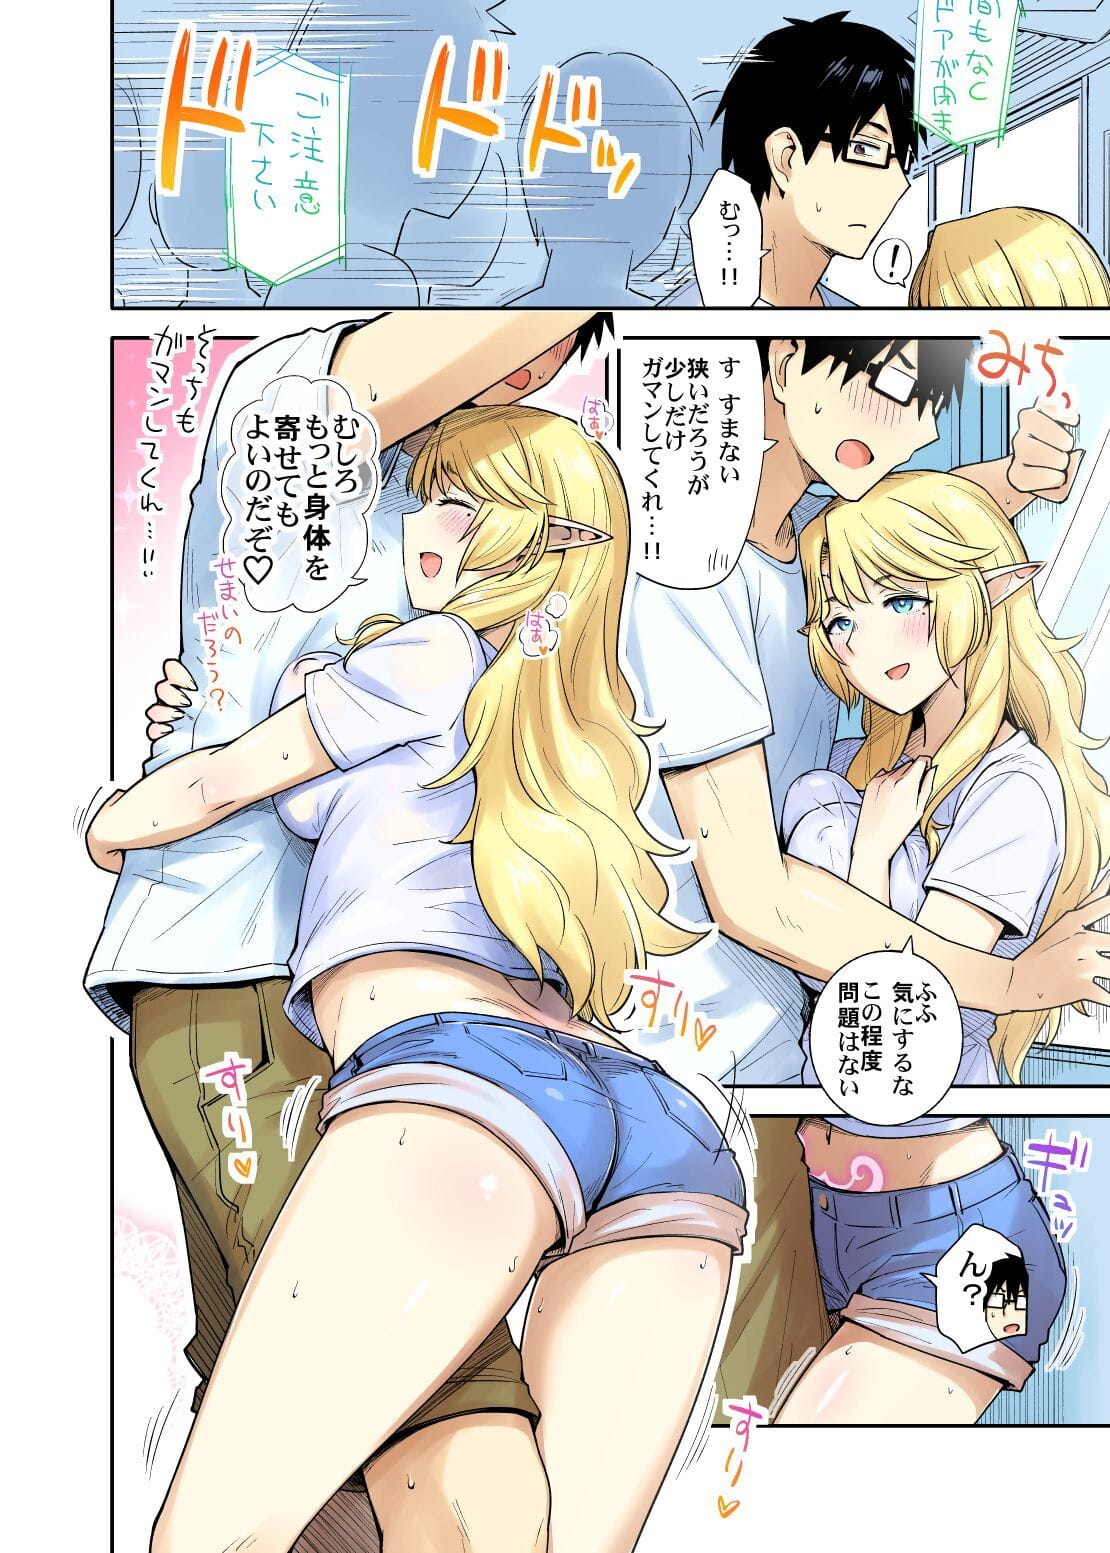 elf manga page 1